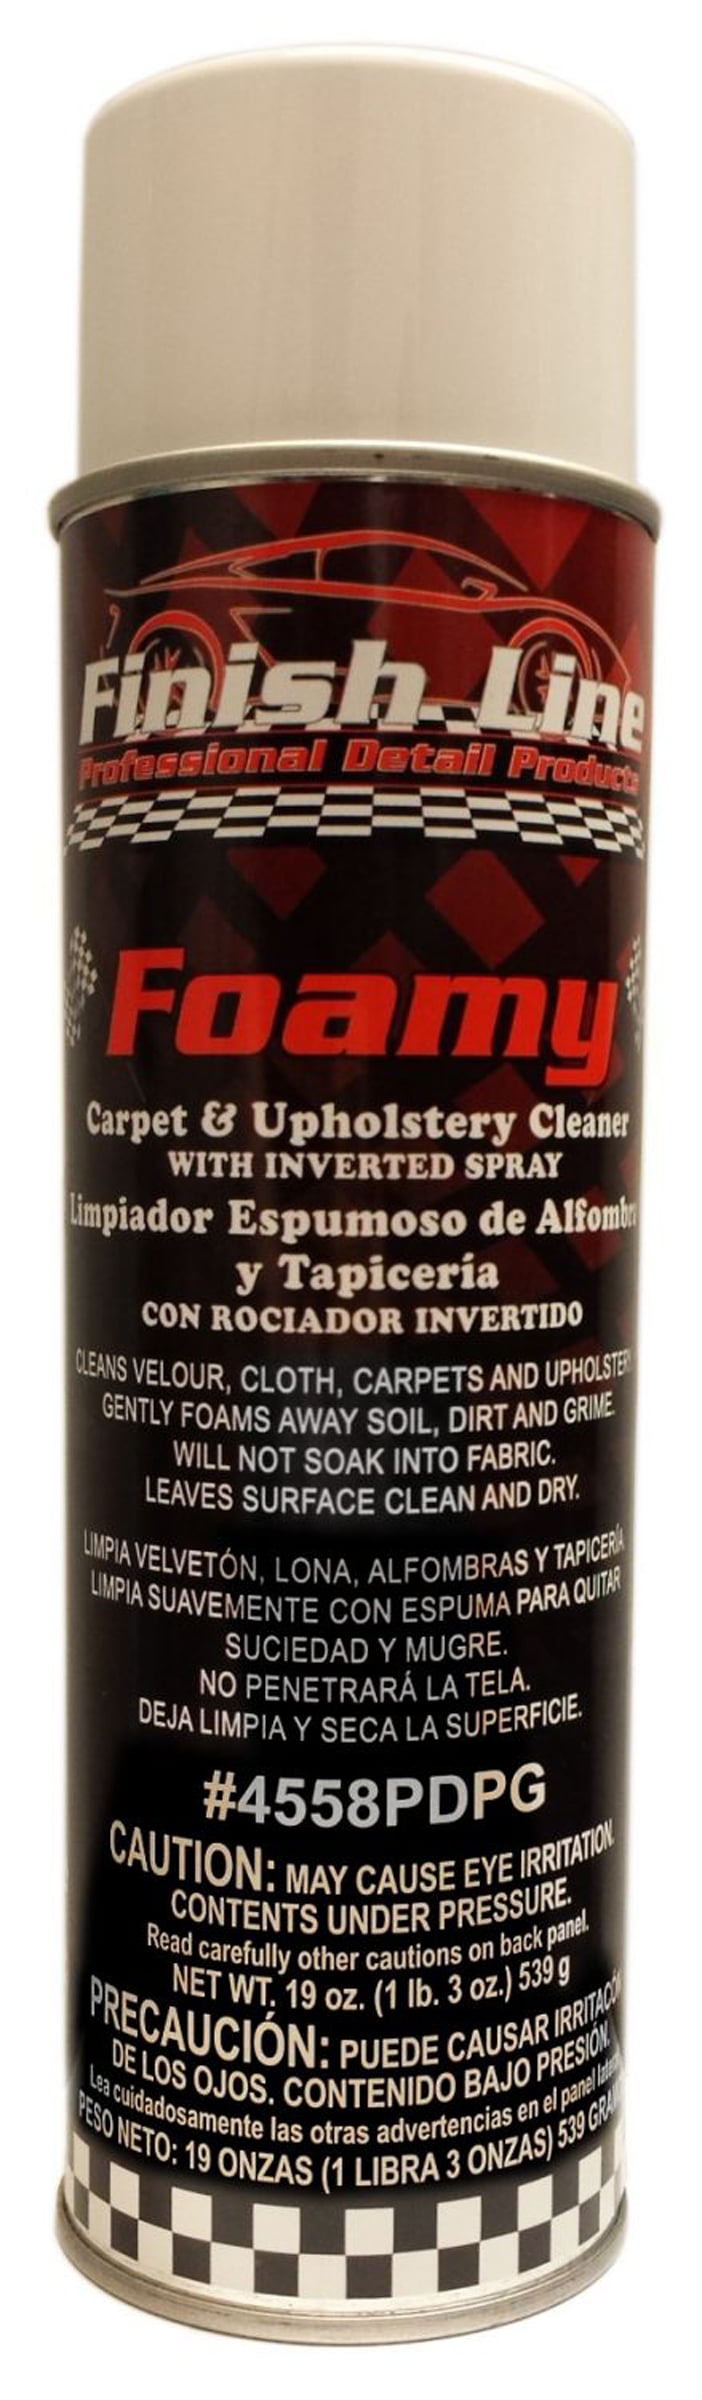 Finish Line Foamy Carpet & Upholstery Inverted Spray - 19 oz